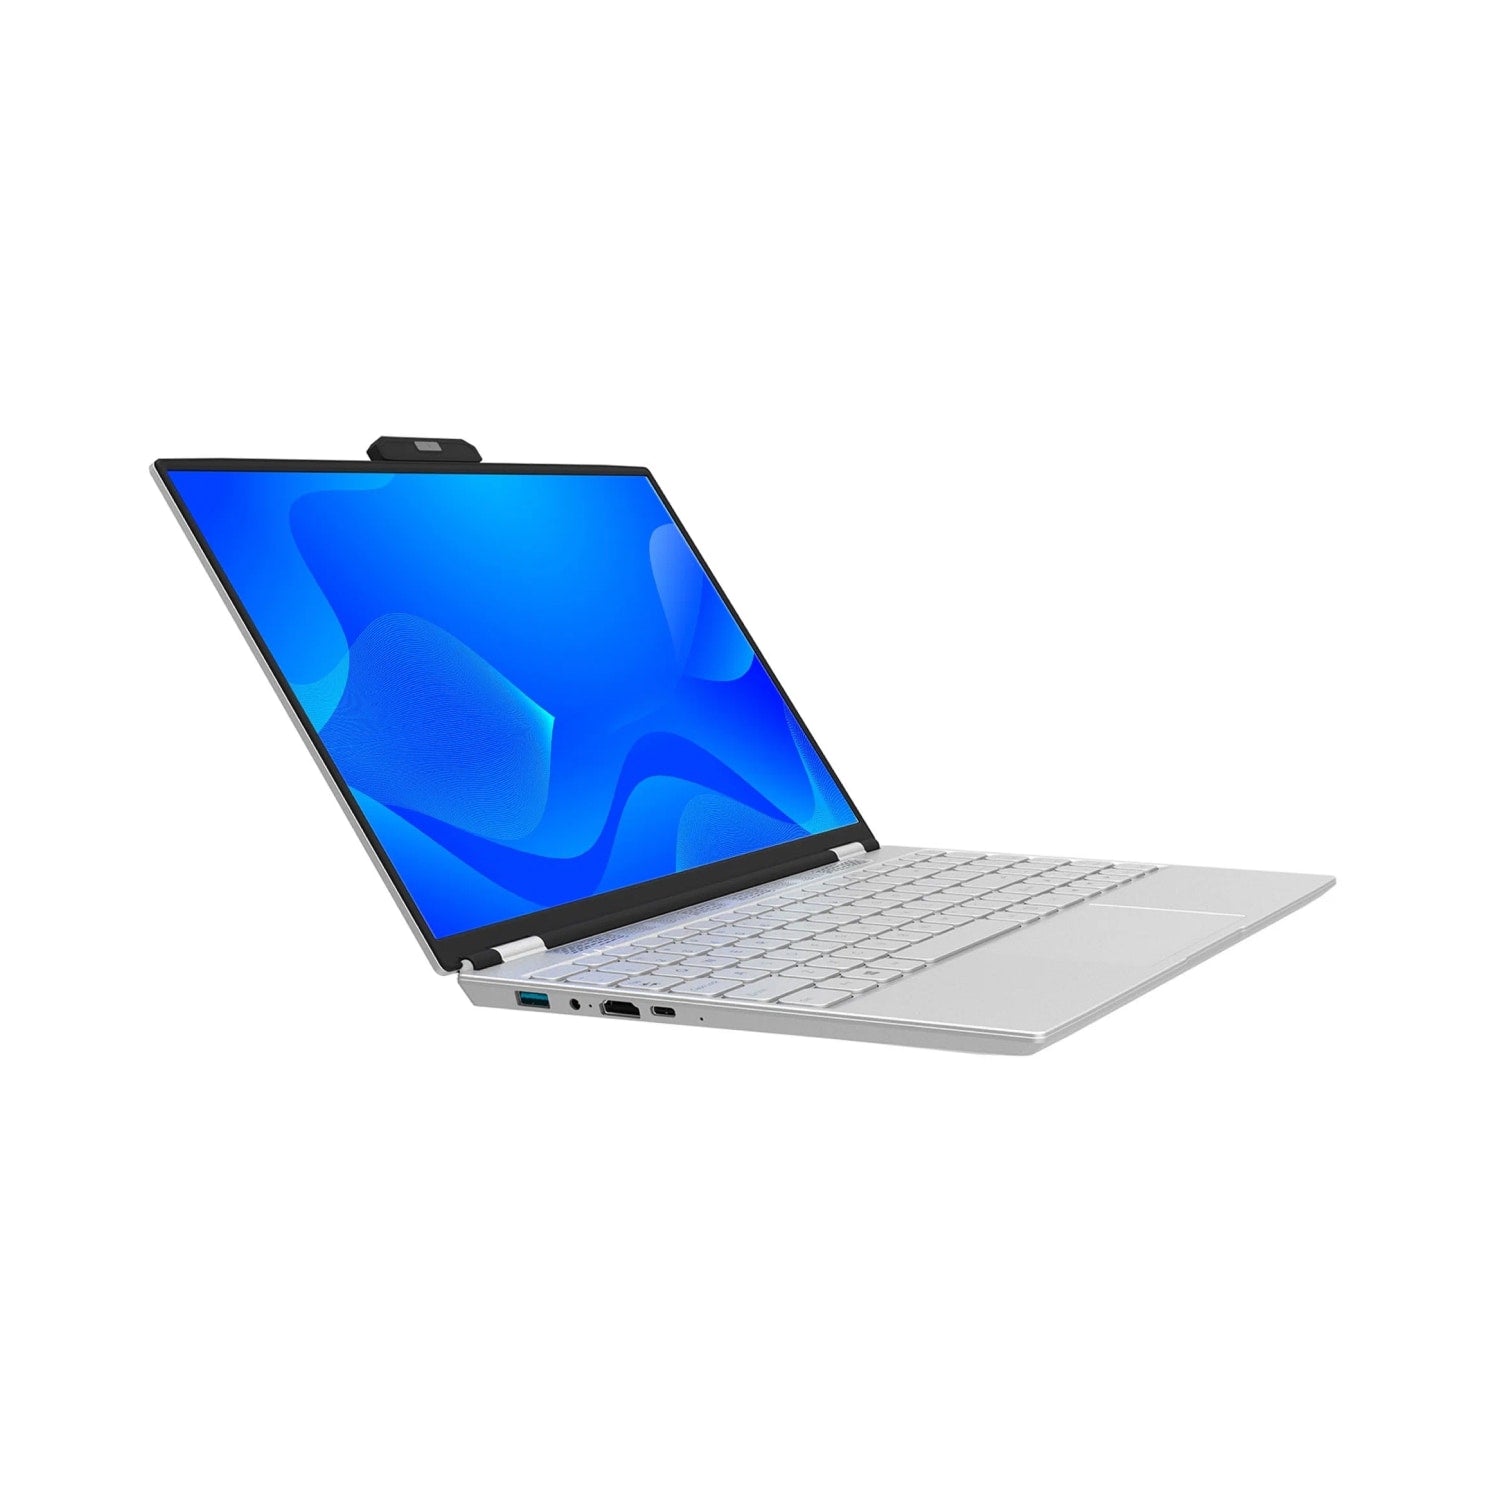 Laptop da gioco SkyBook 14T